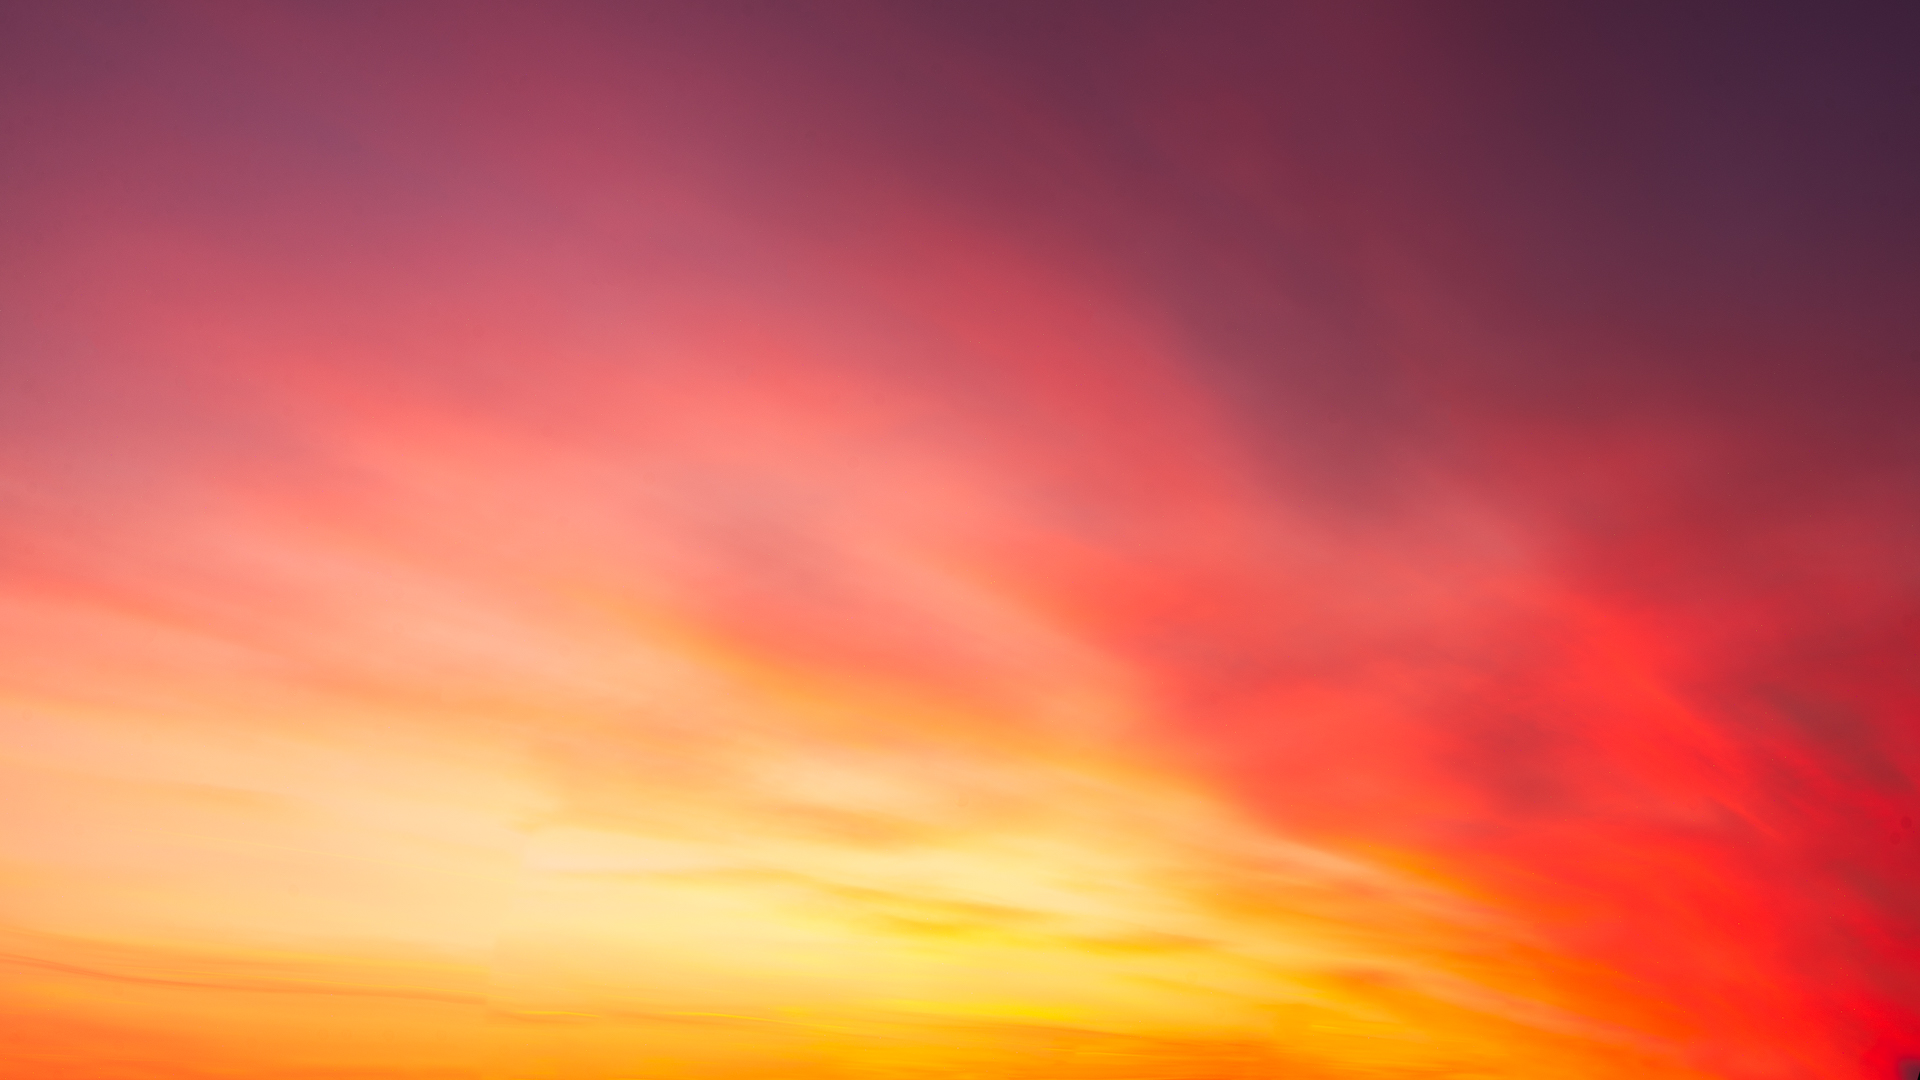 solo nuvole rosse - tramonto minimalista...